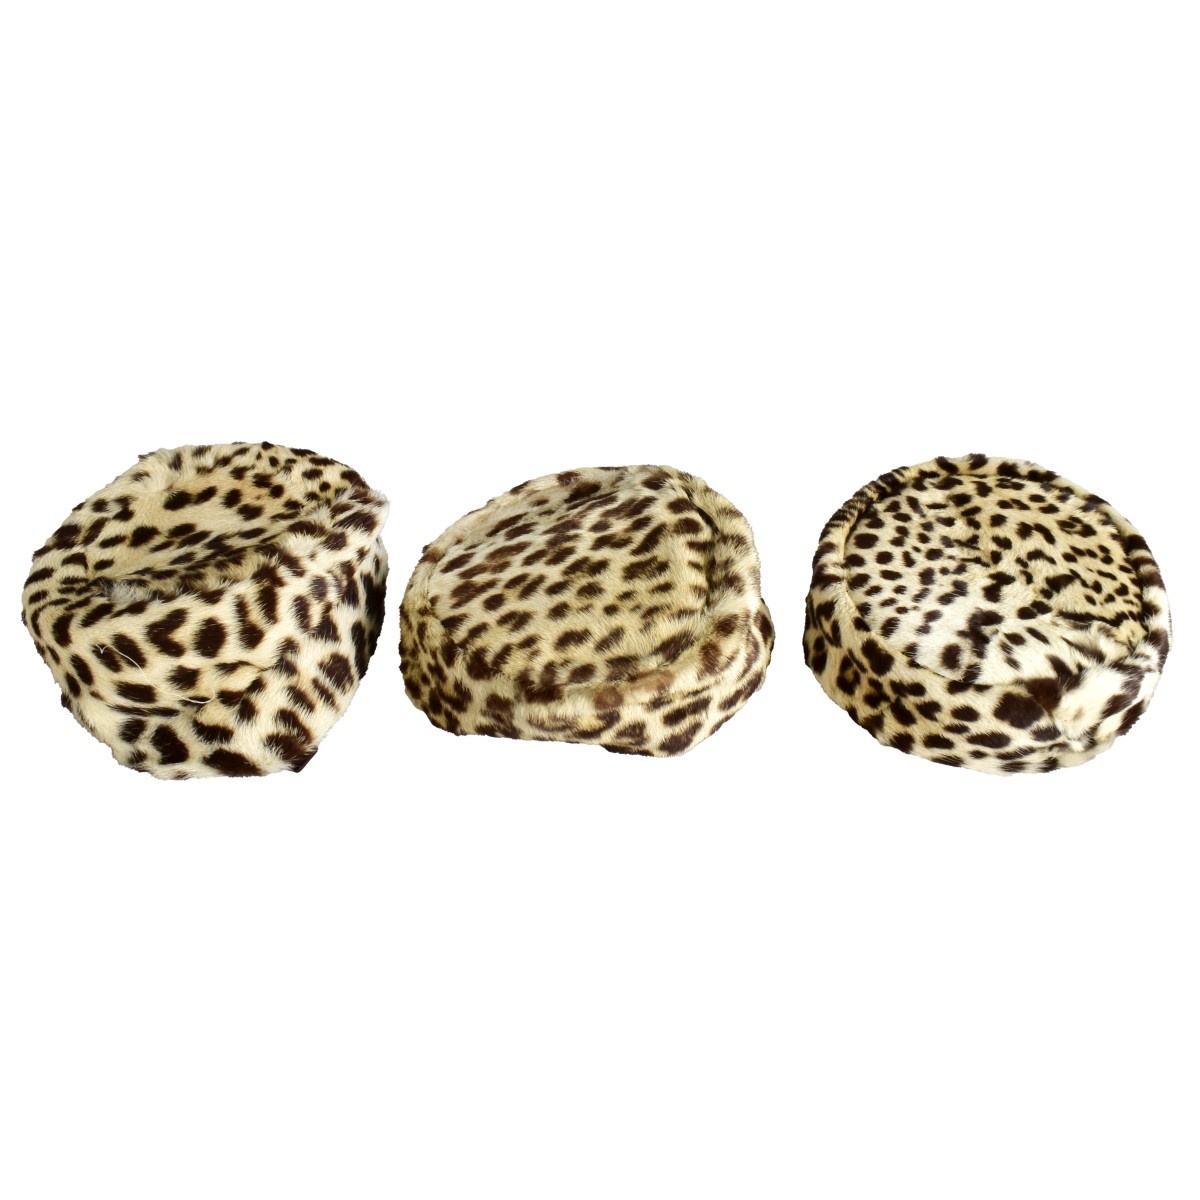 Three Genuine Leopard Skin Hats